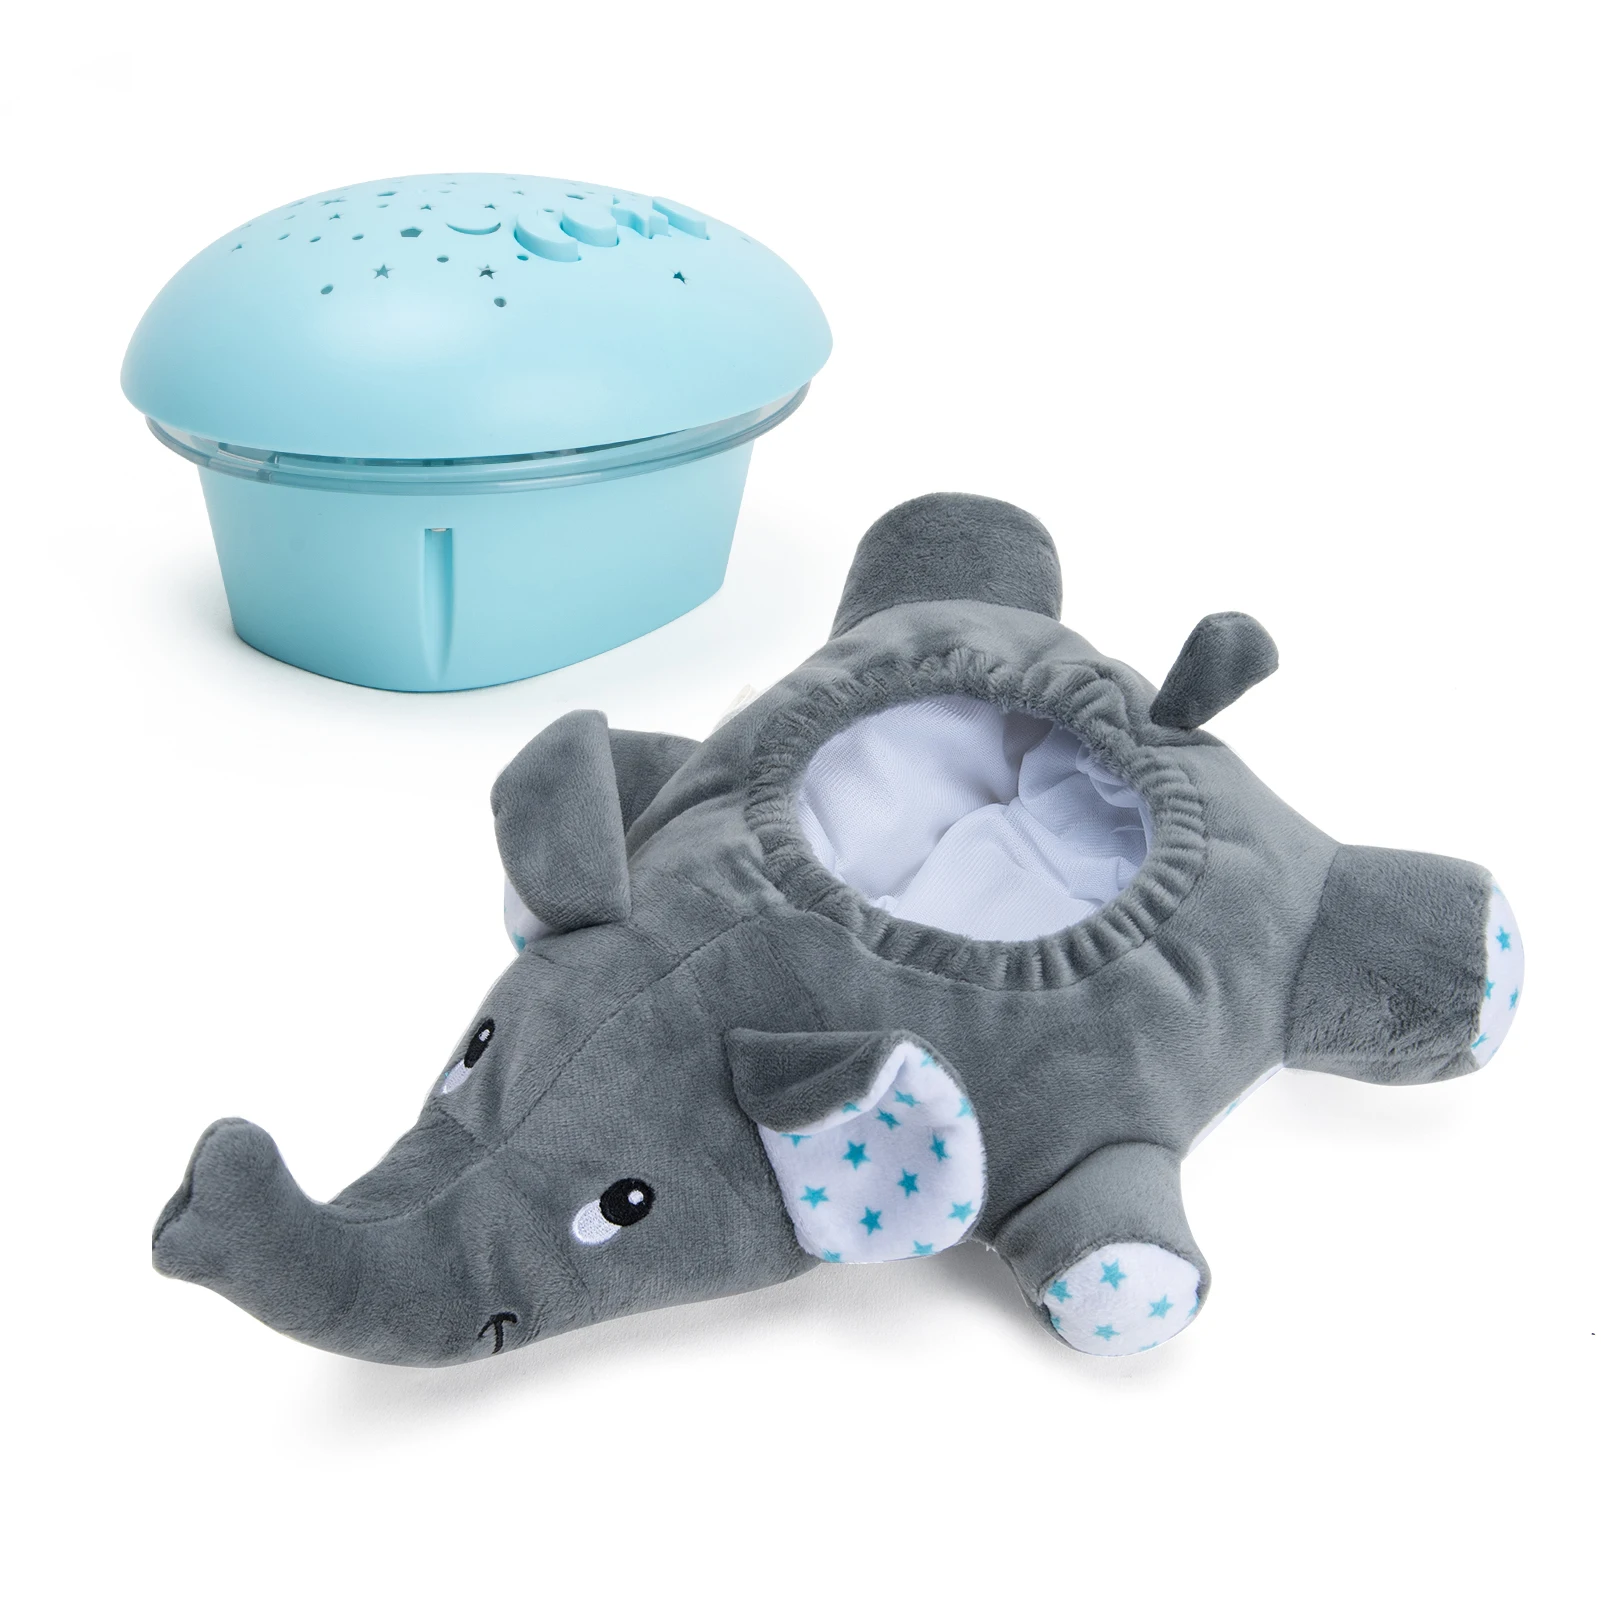 Wholesale The Stuffed Baby Whole Cheap Sleeping Custom Soft Elephant Plush Toy